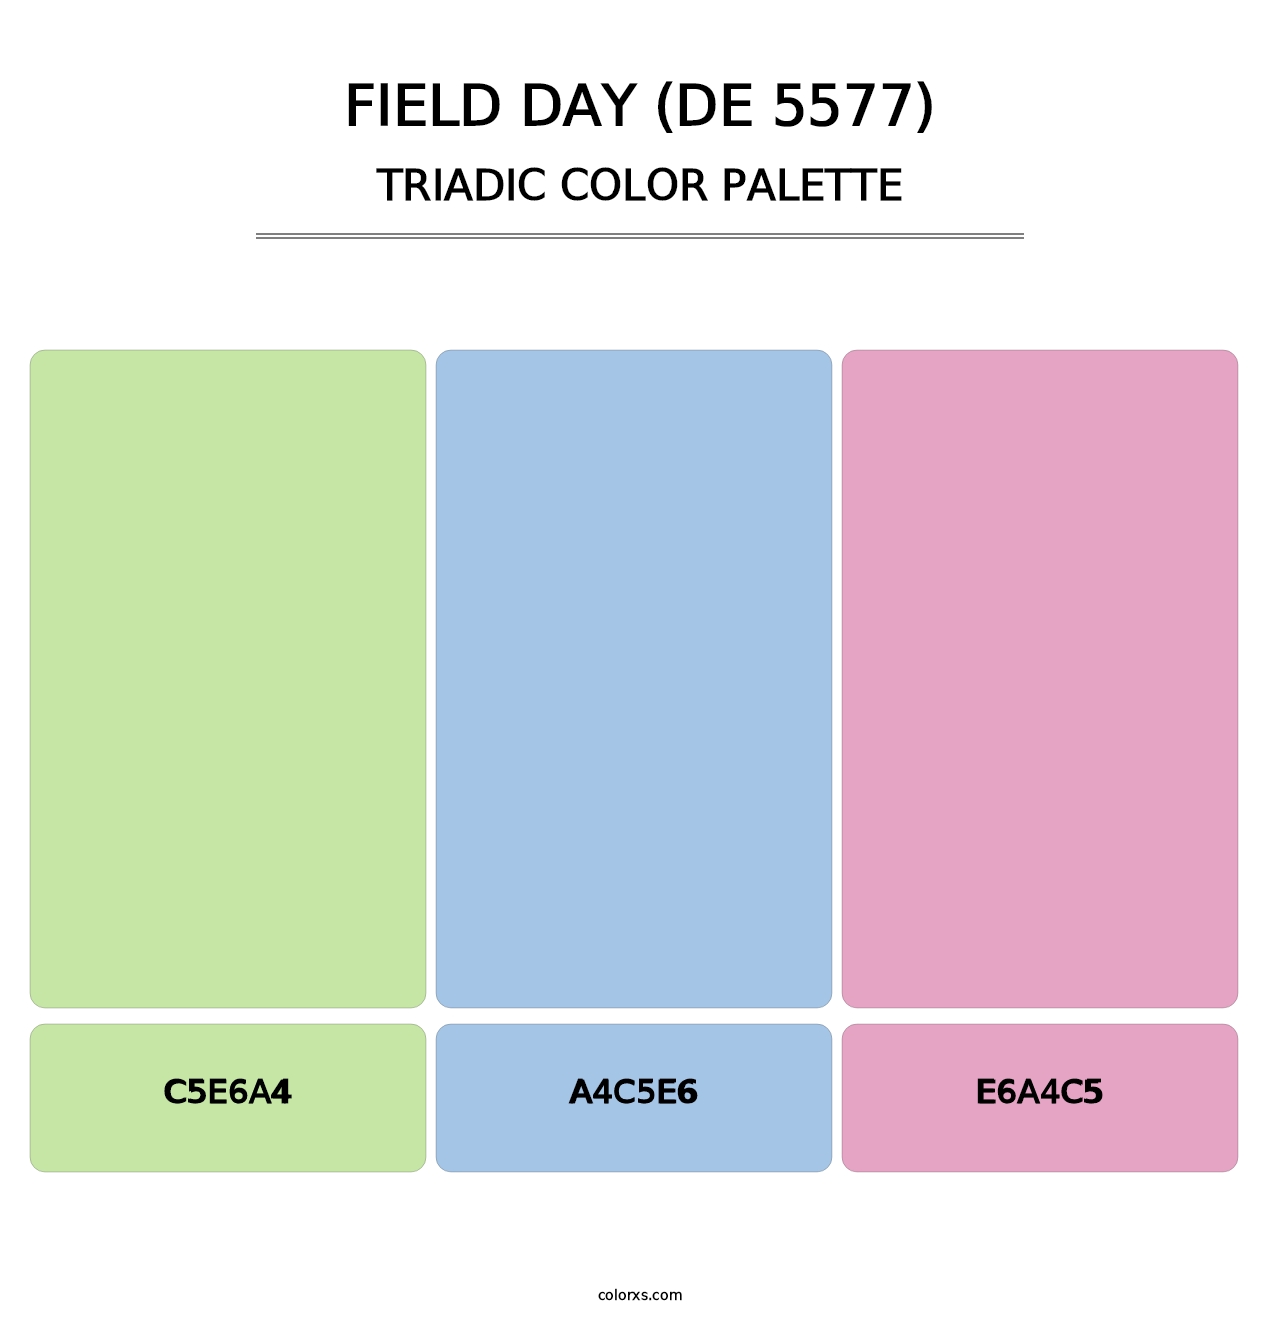 Field Day (DE 5577) - Triadic Color Palette